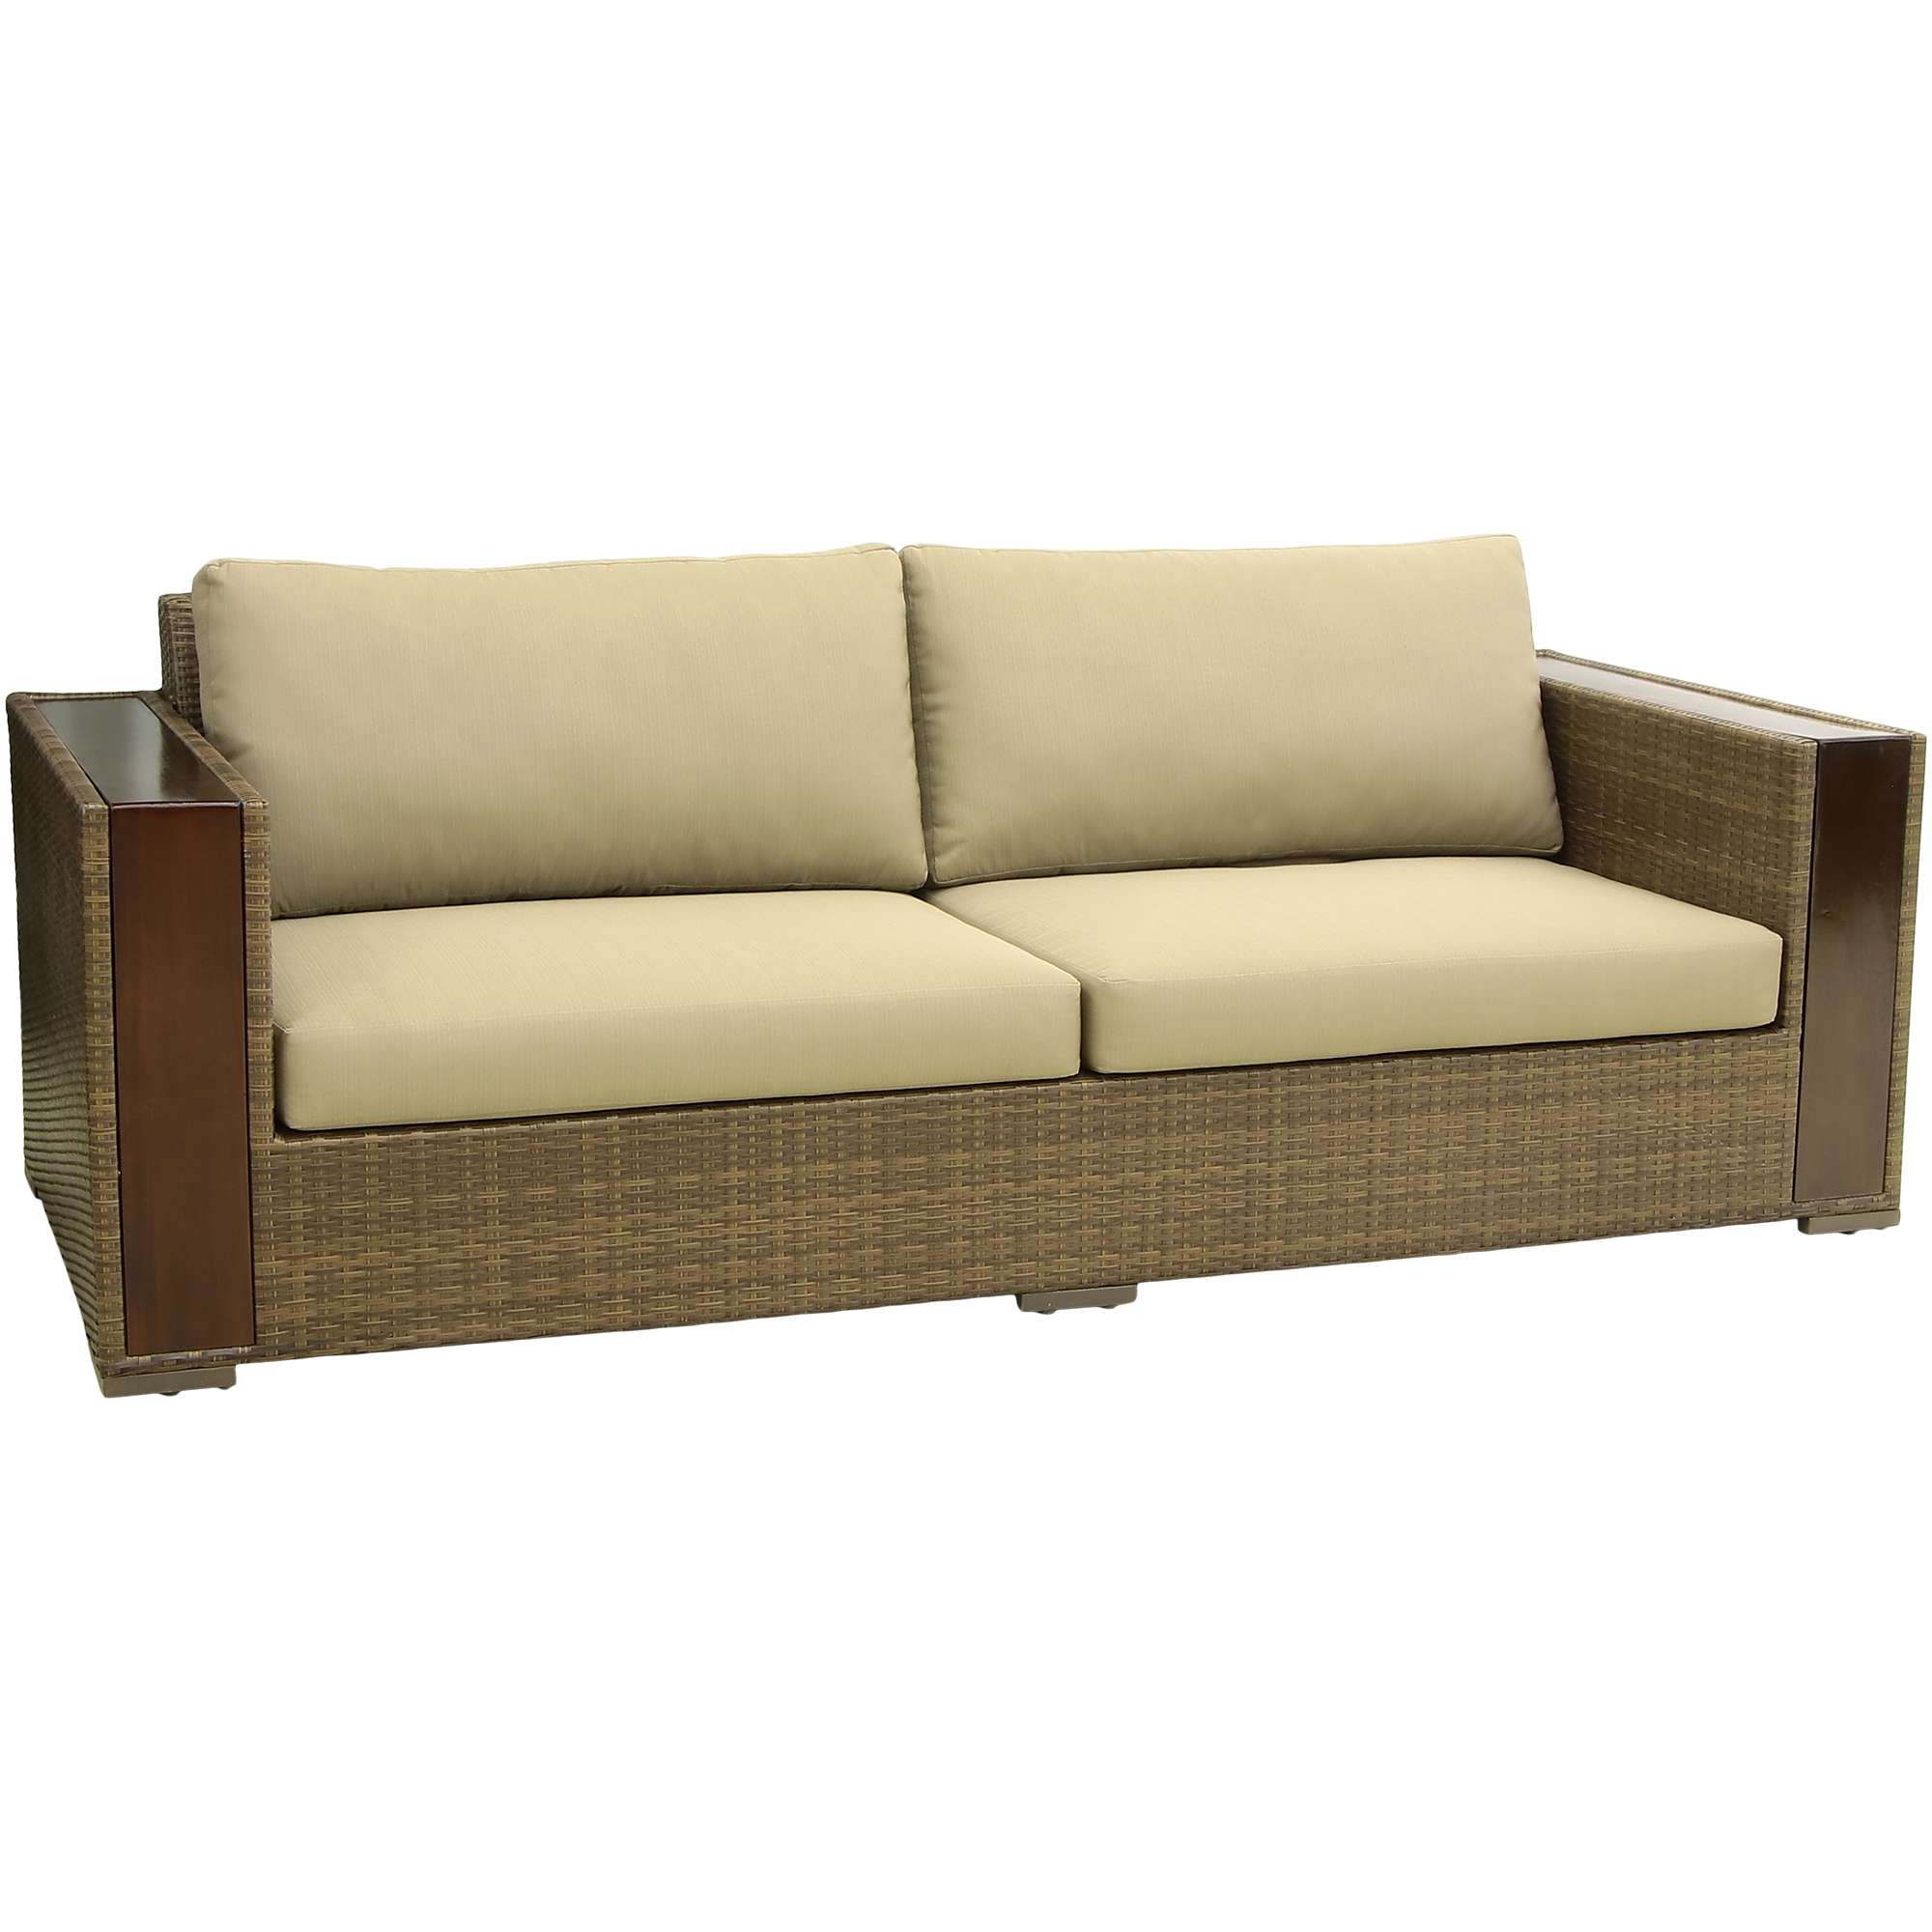 Комплект мебели Ronica Toulon 4 предмета, цвет коричневый, размер 100х240х82 - фото 2